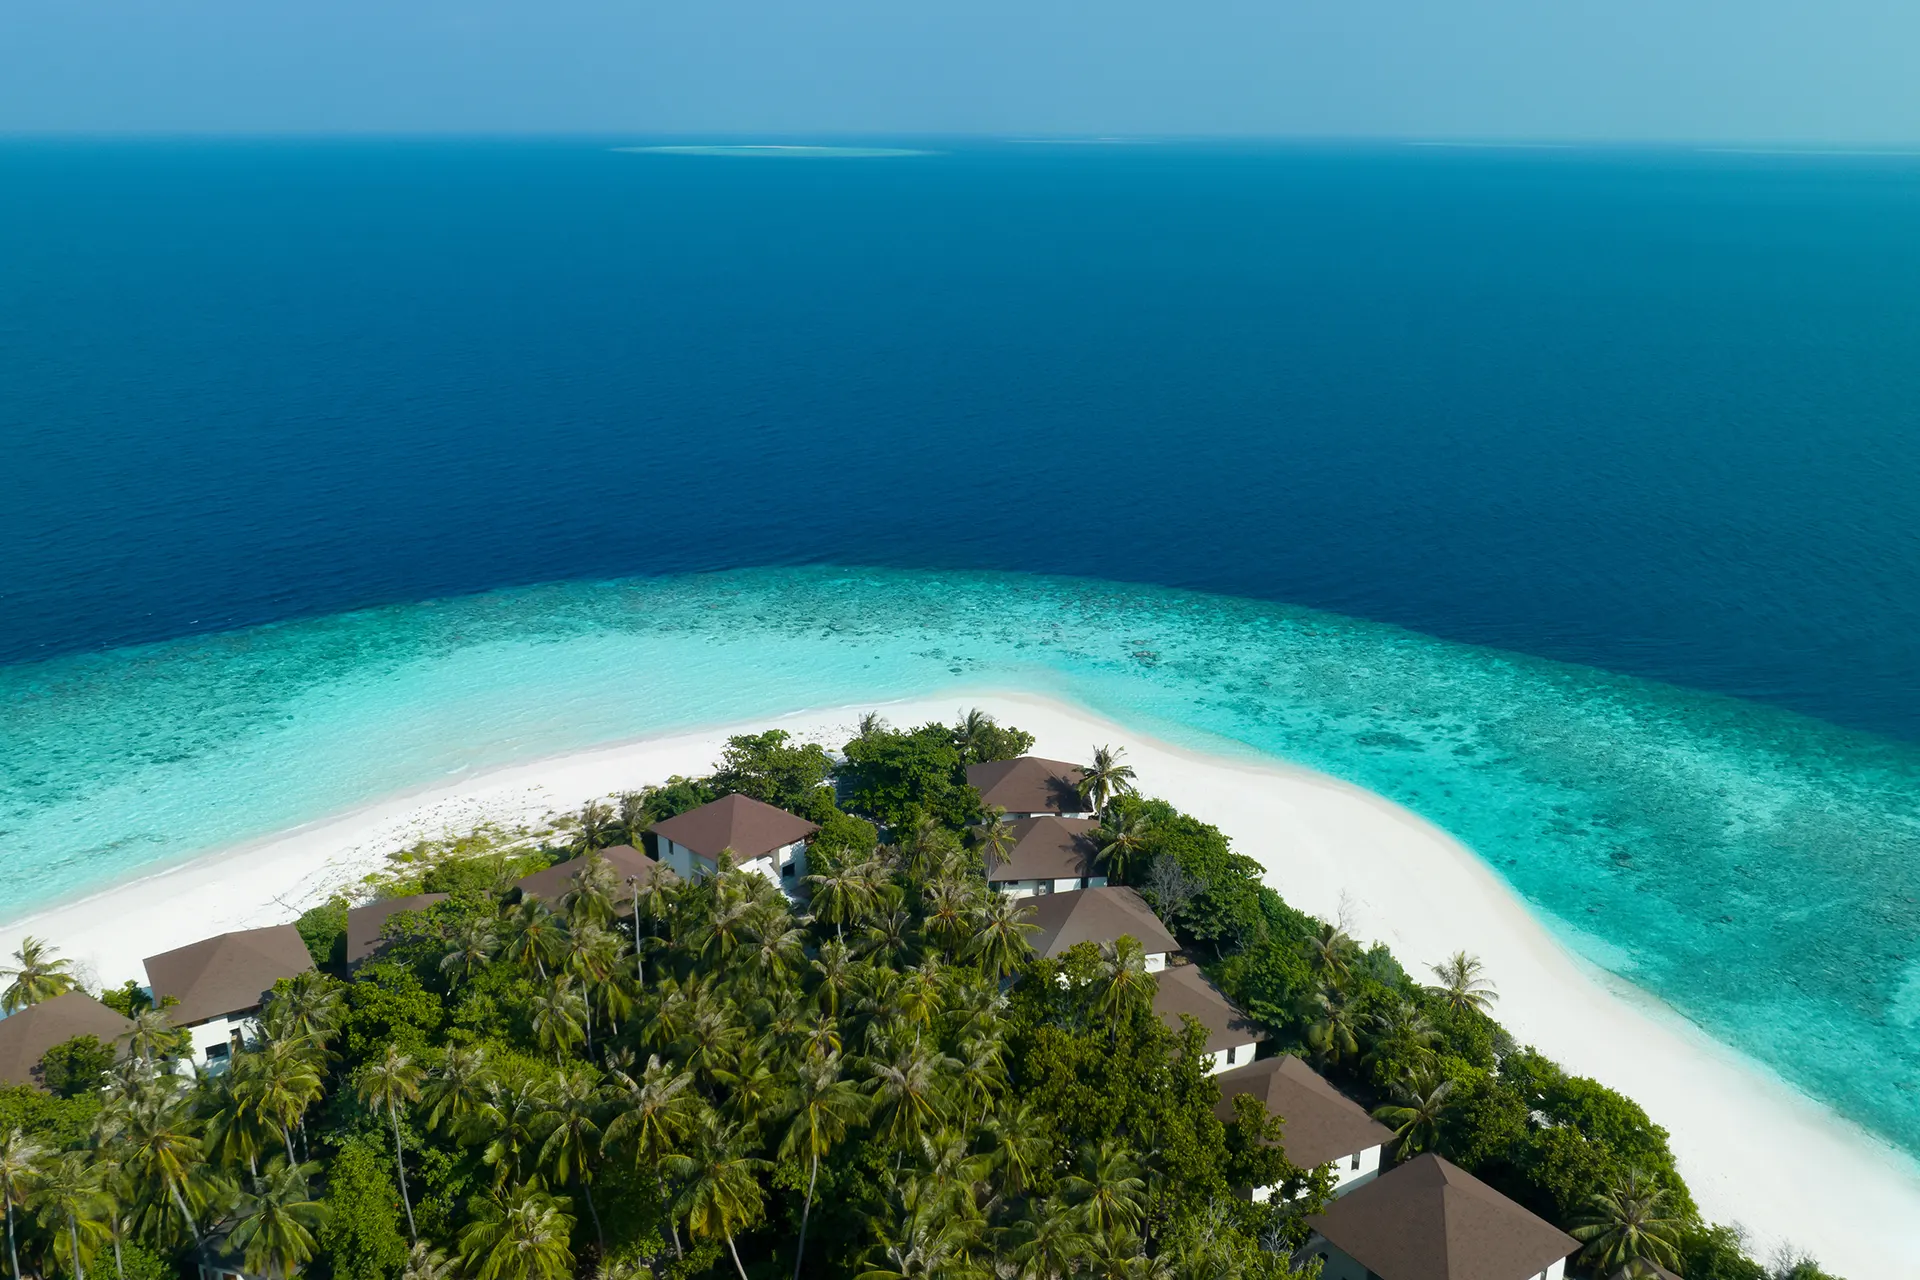 Ende einer Malediven Insel im Ozean